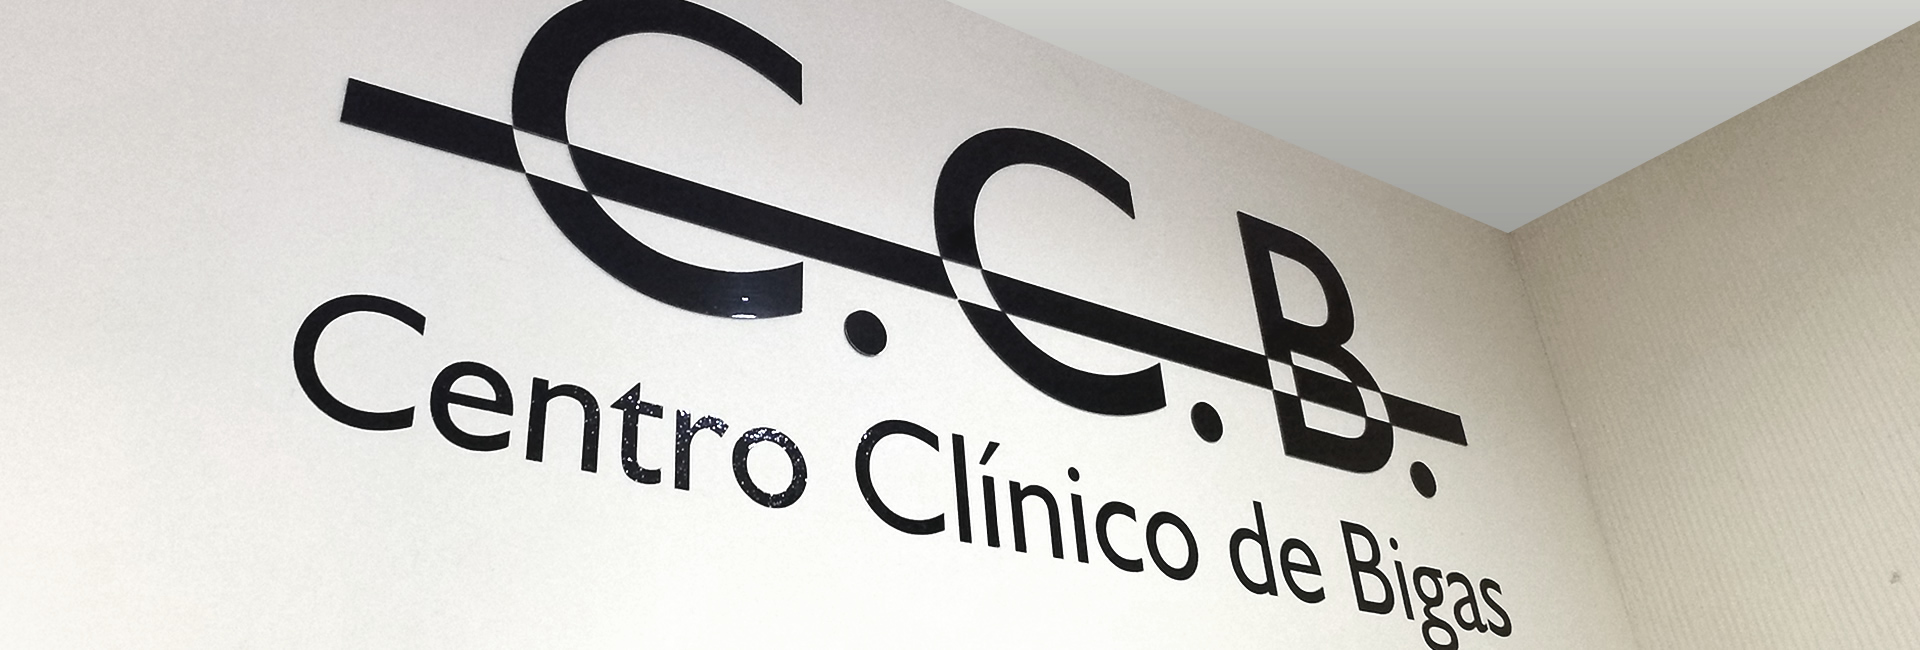 CCB - Centro Clinico de Bigas